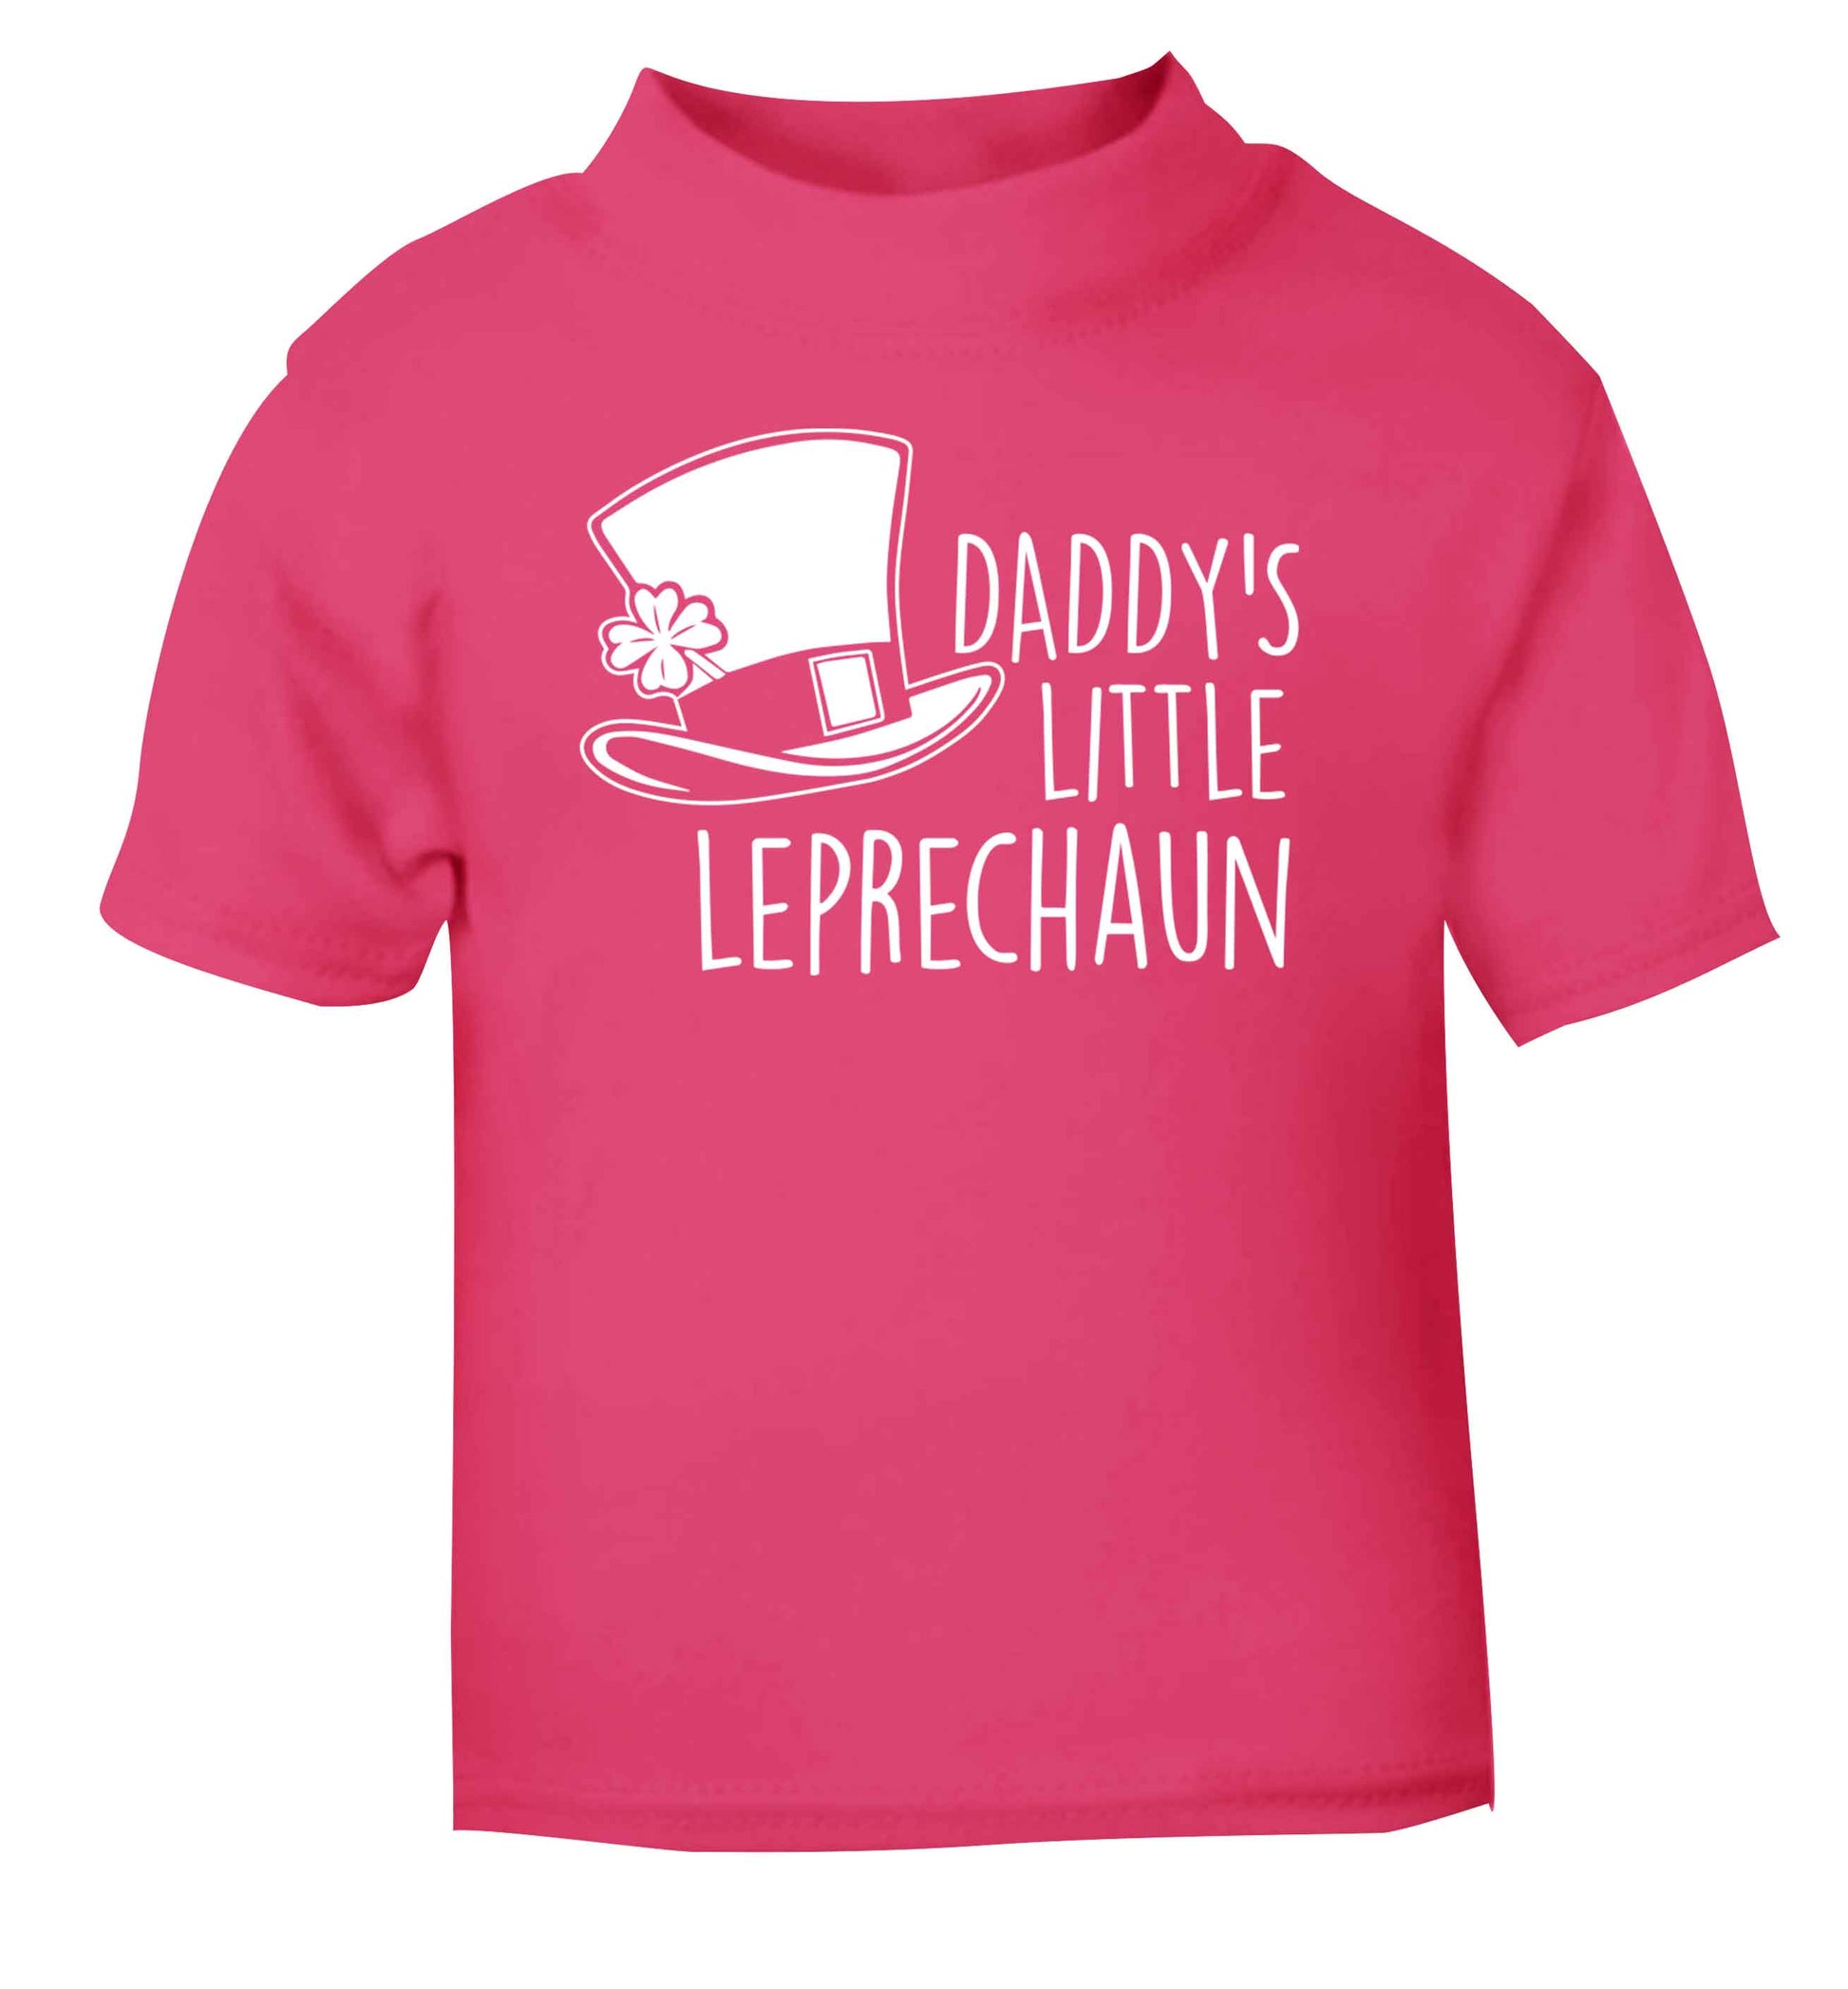 Daddy's little leprechaun pink baby toddler Tshirt 2 Years